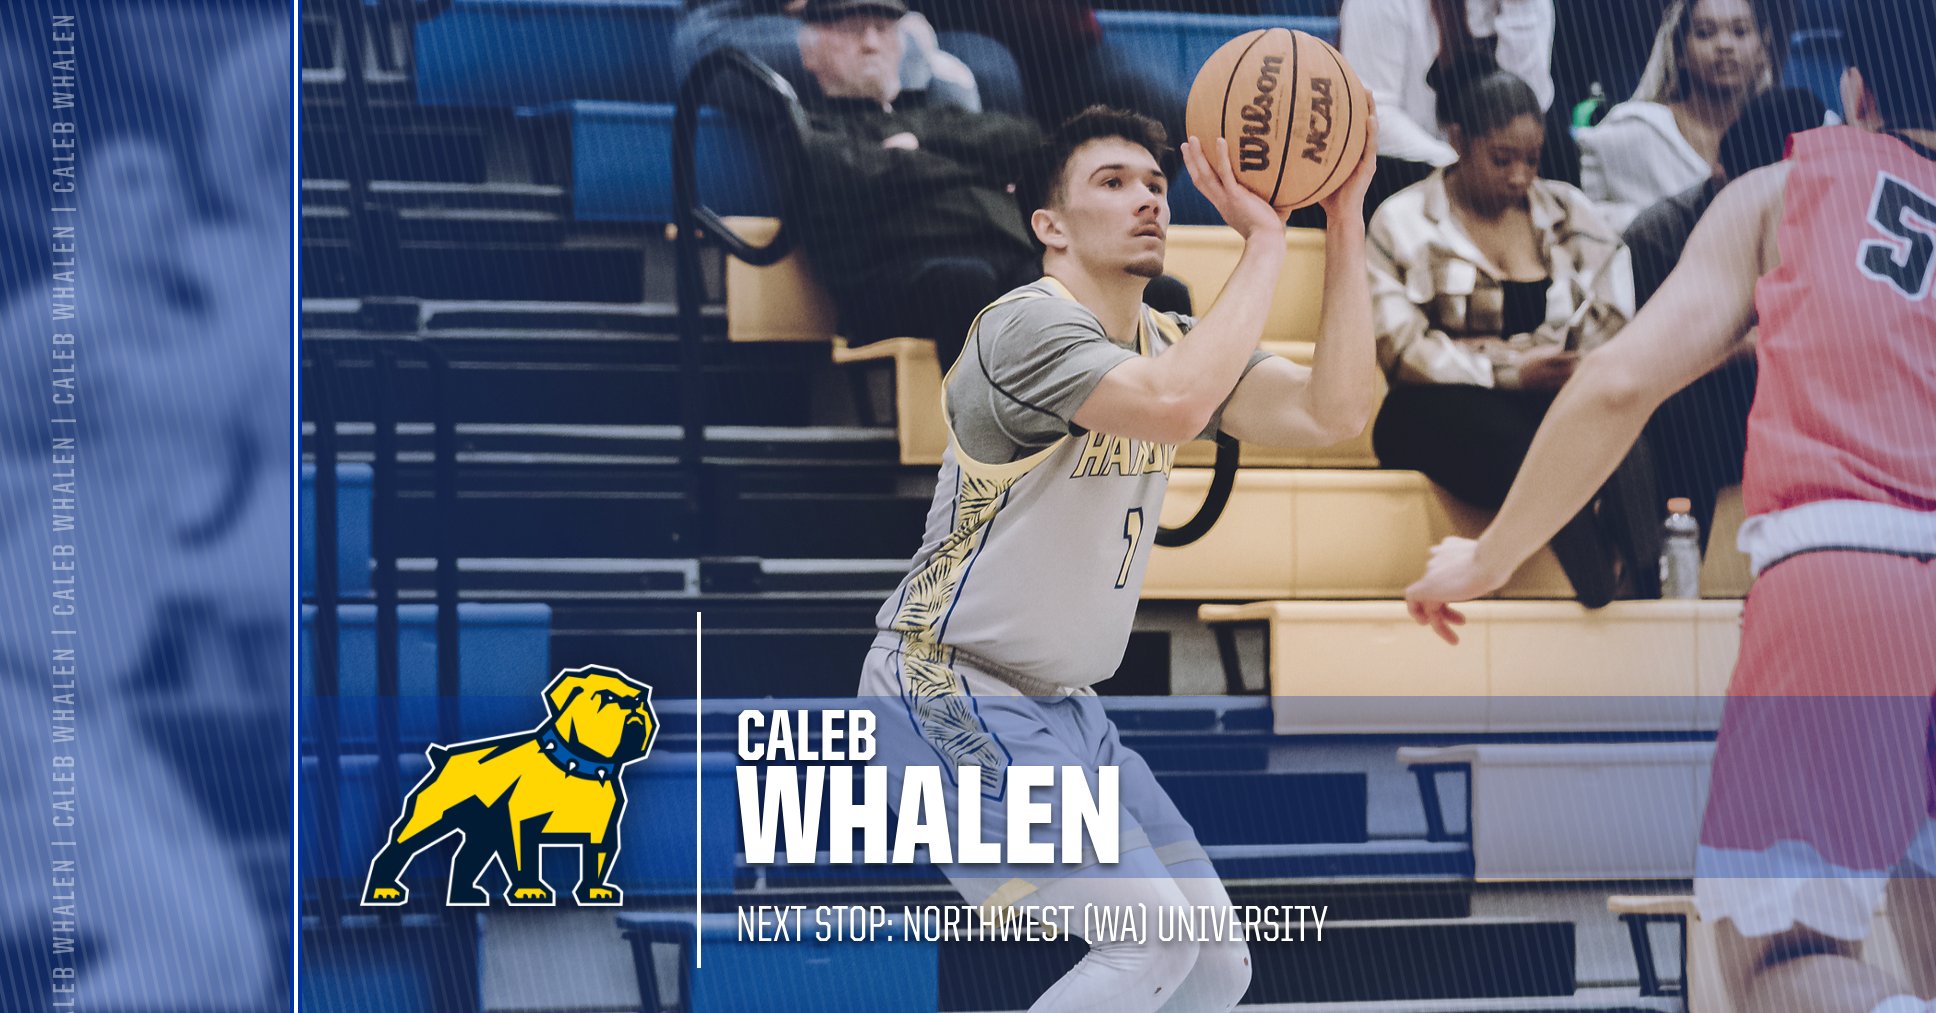 Men's Basketball: Caleb Whalen Heading to Northwest (Wash.) University